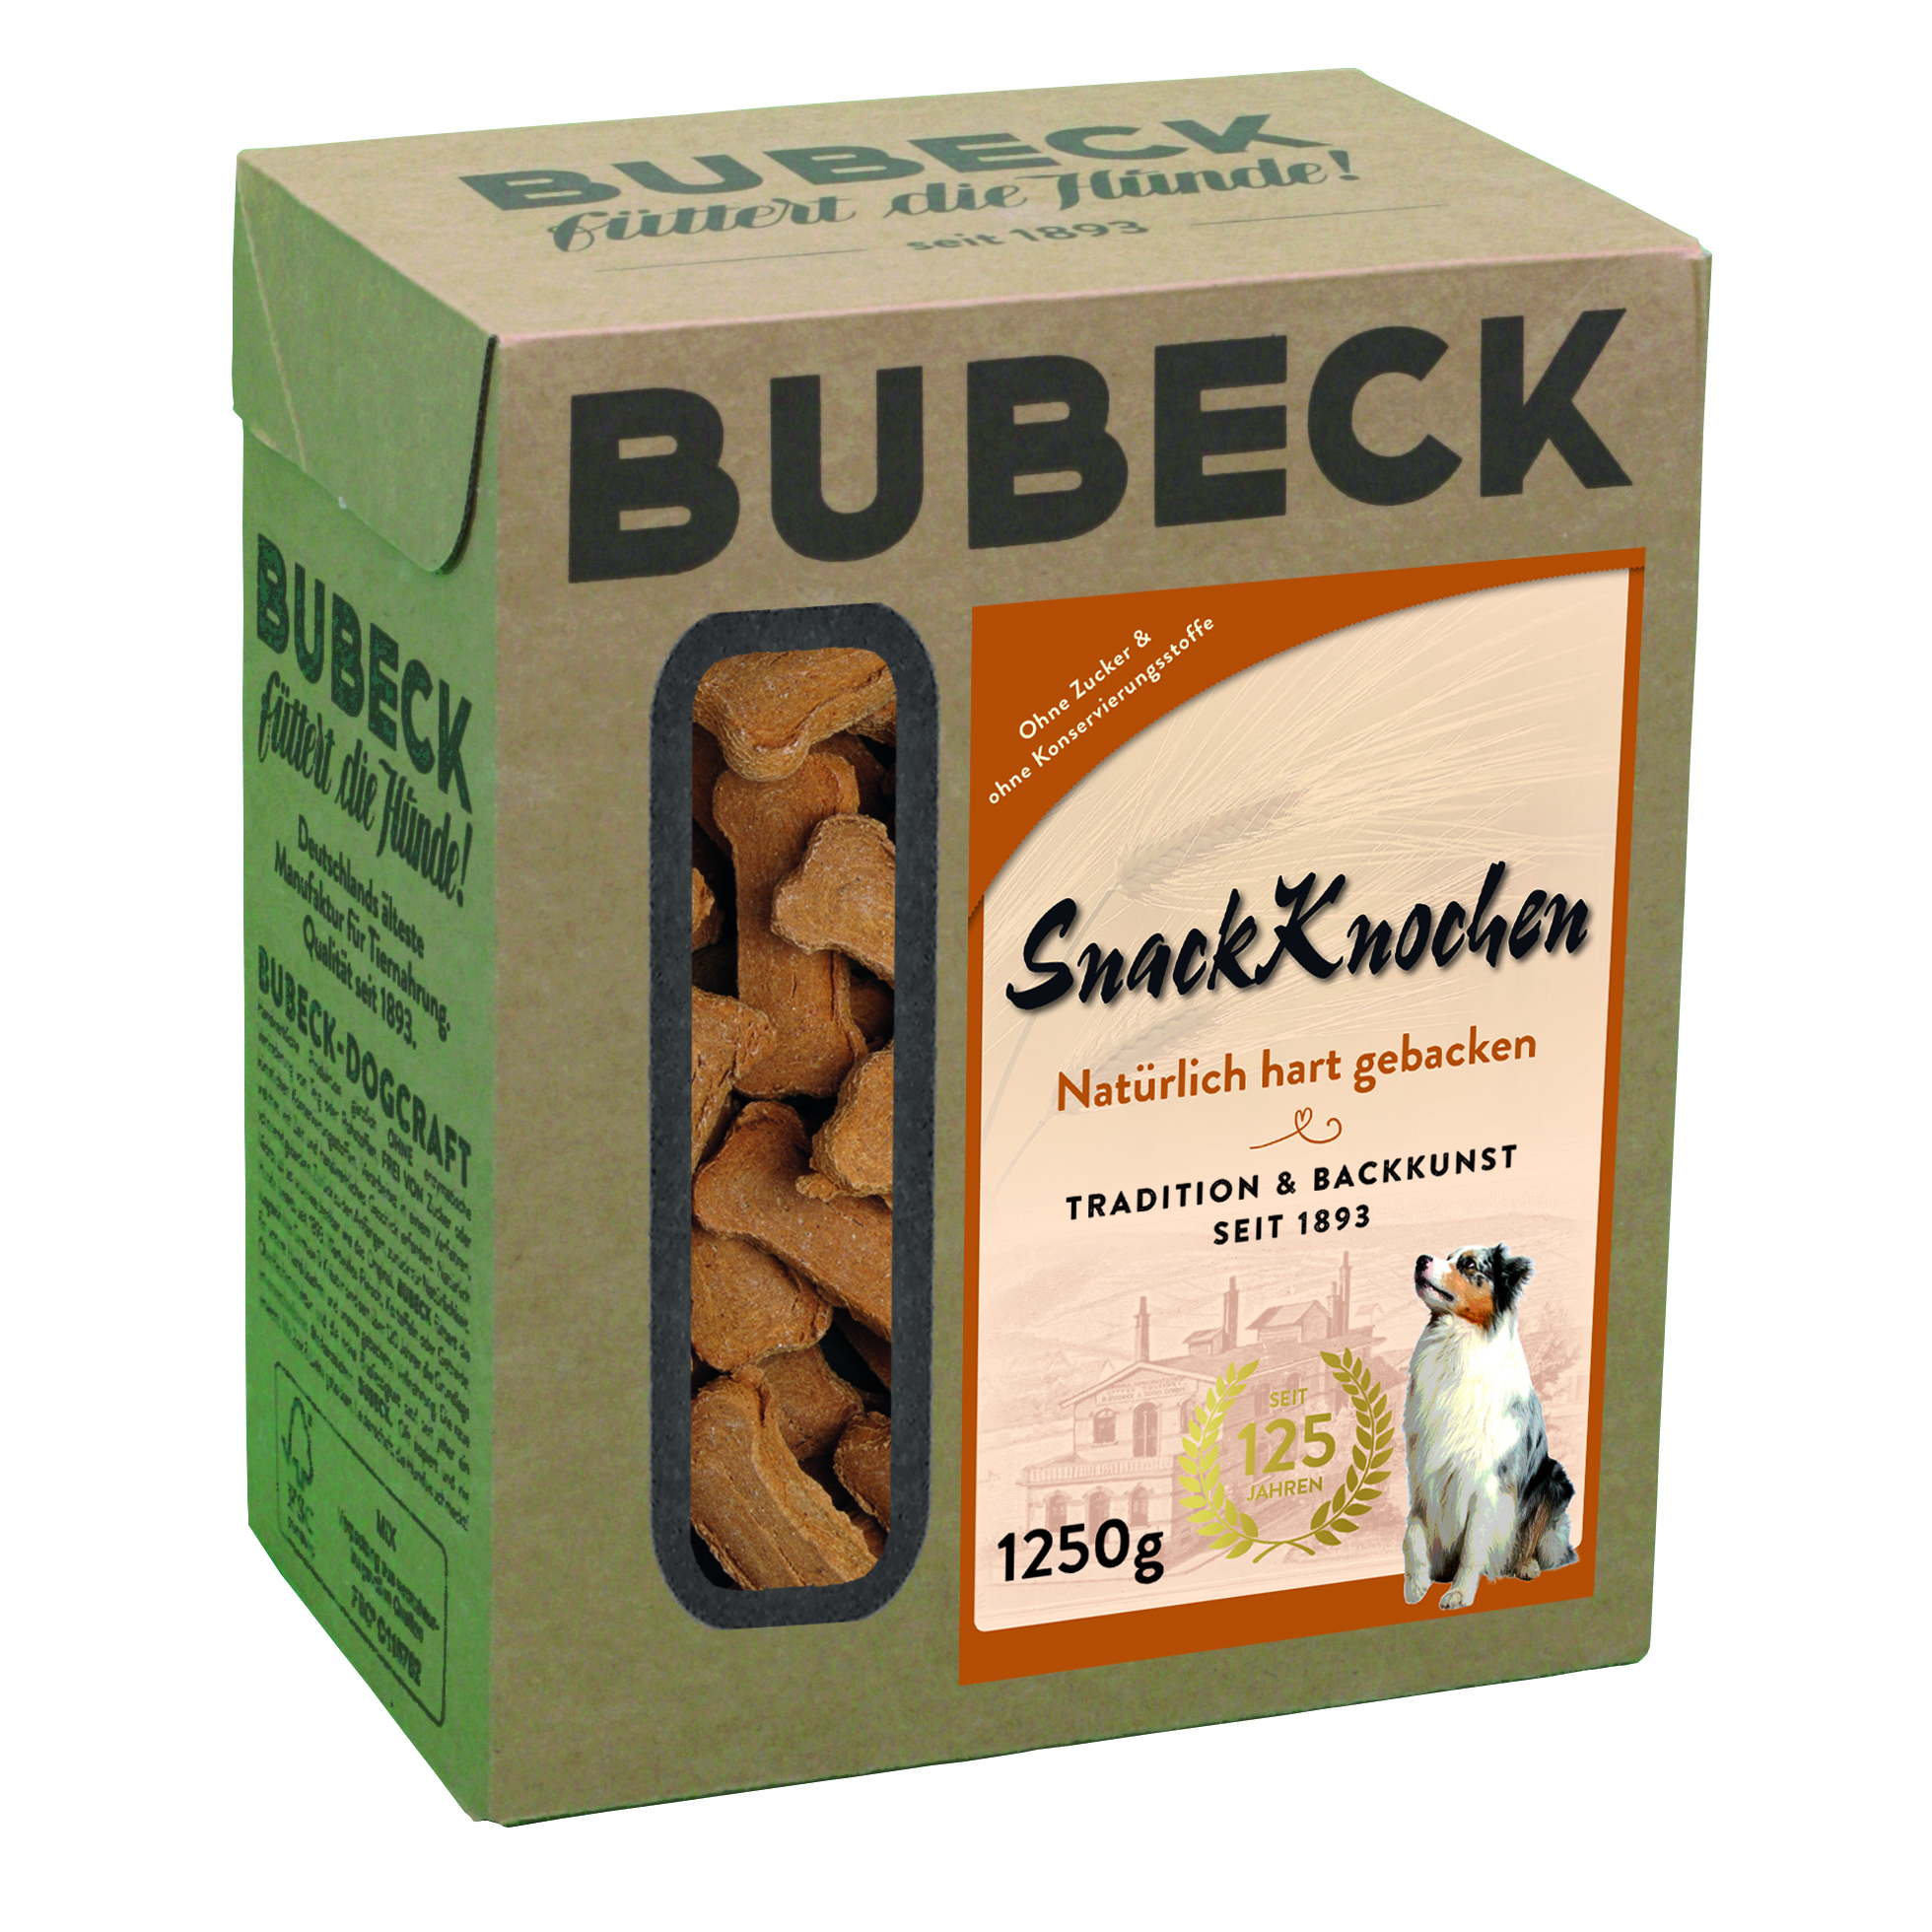 Bubeck, SnackKnochen, 1250g